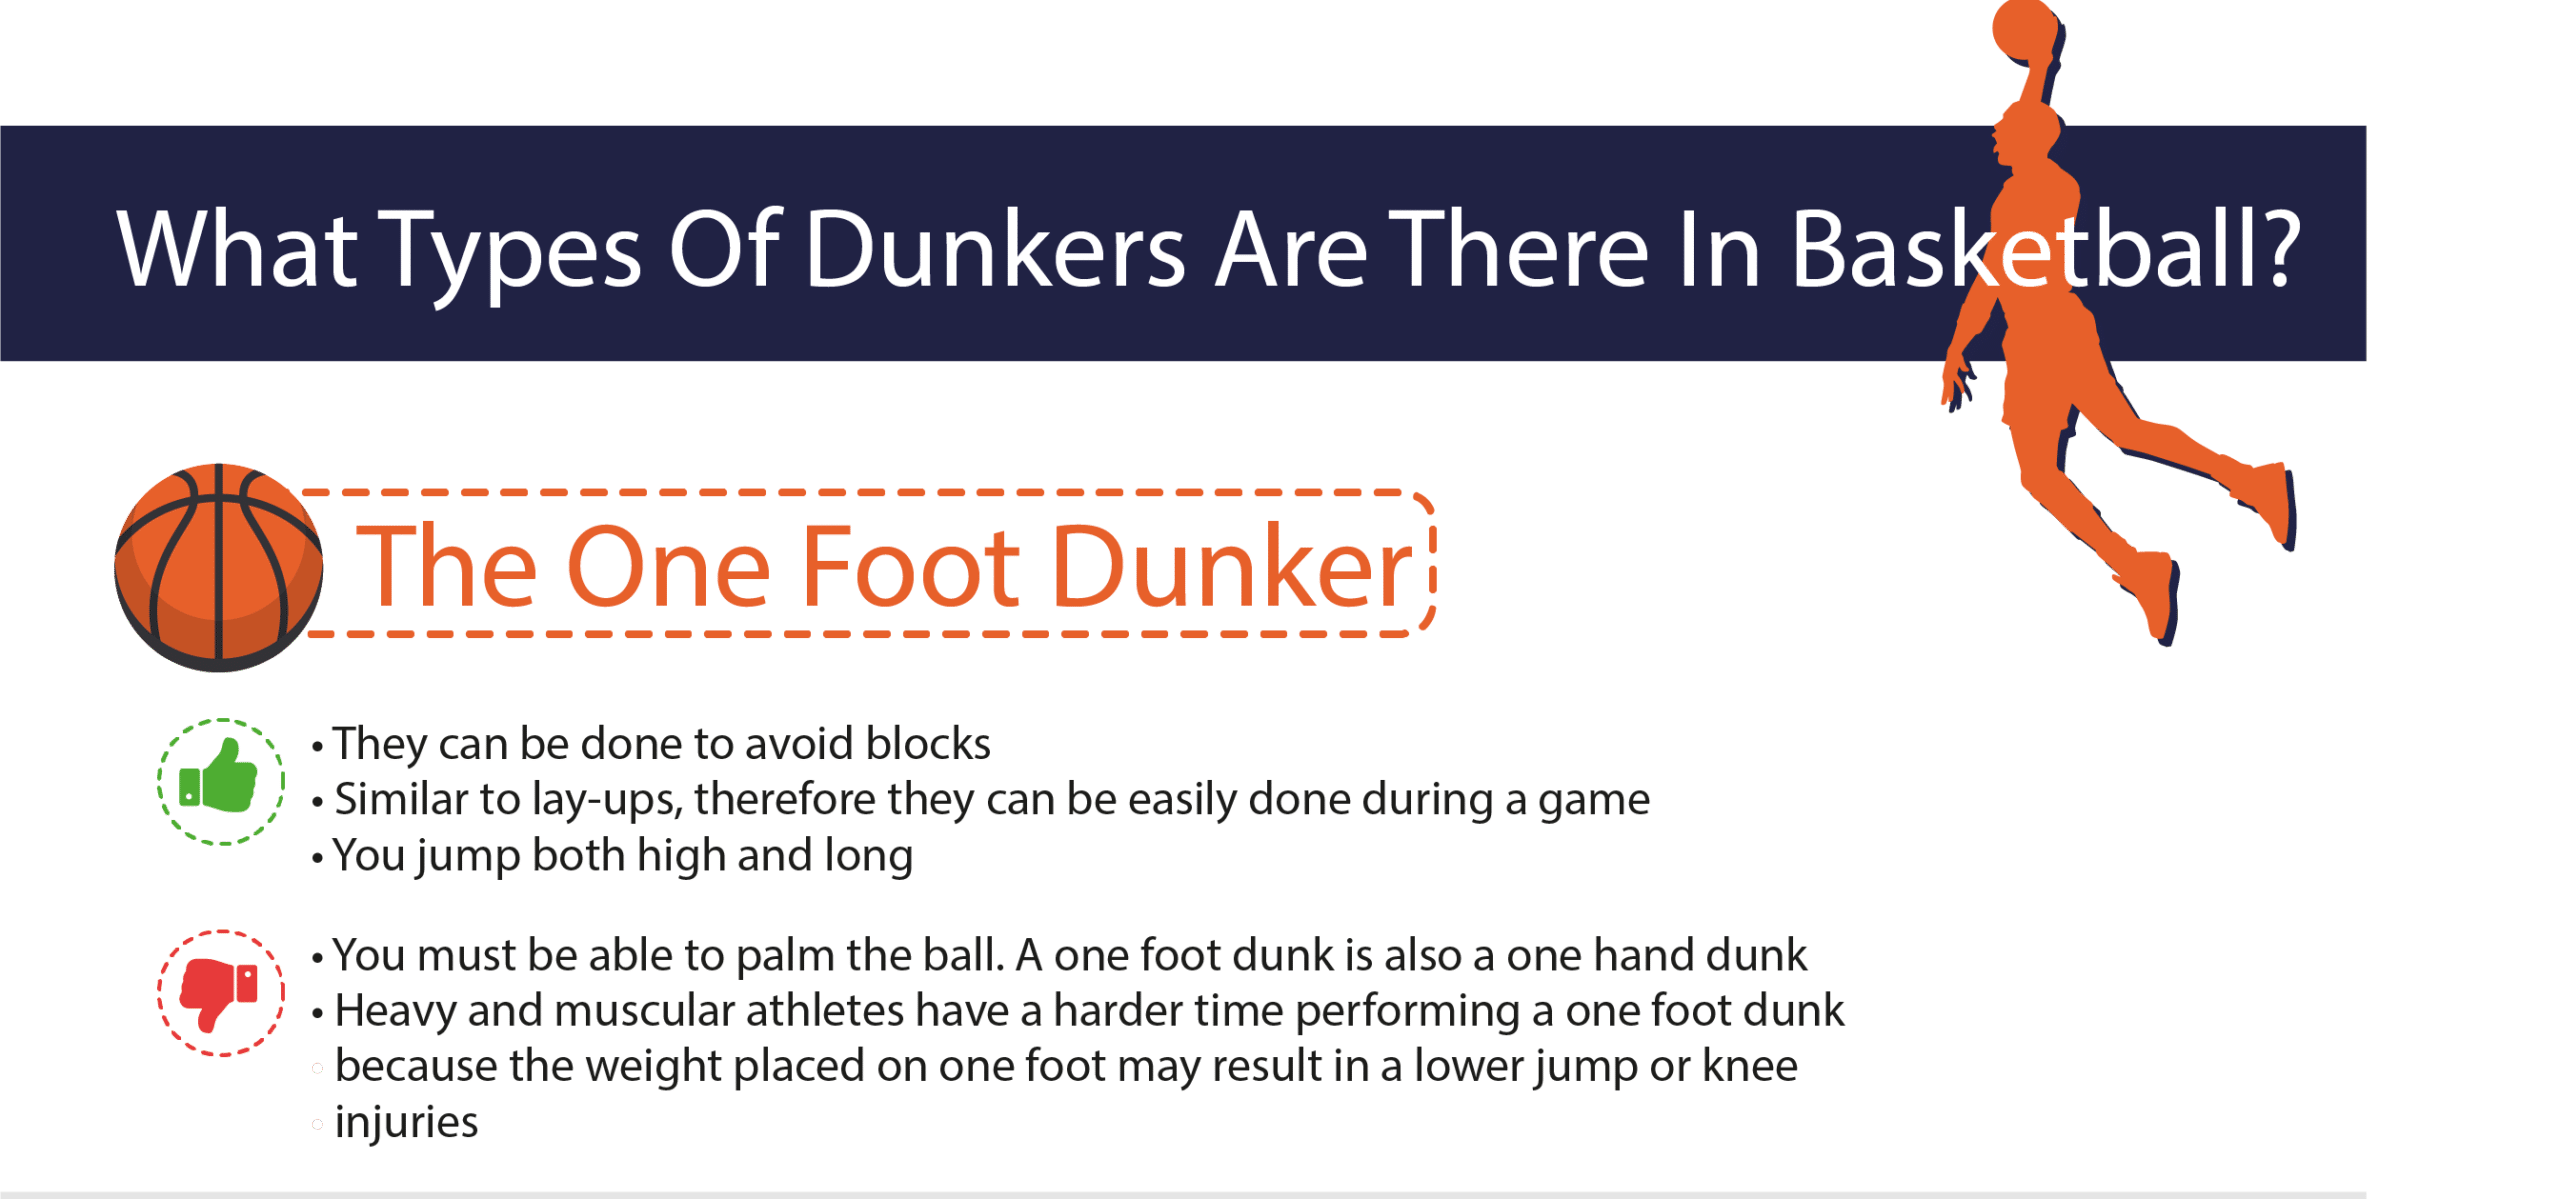 One foot dunker